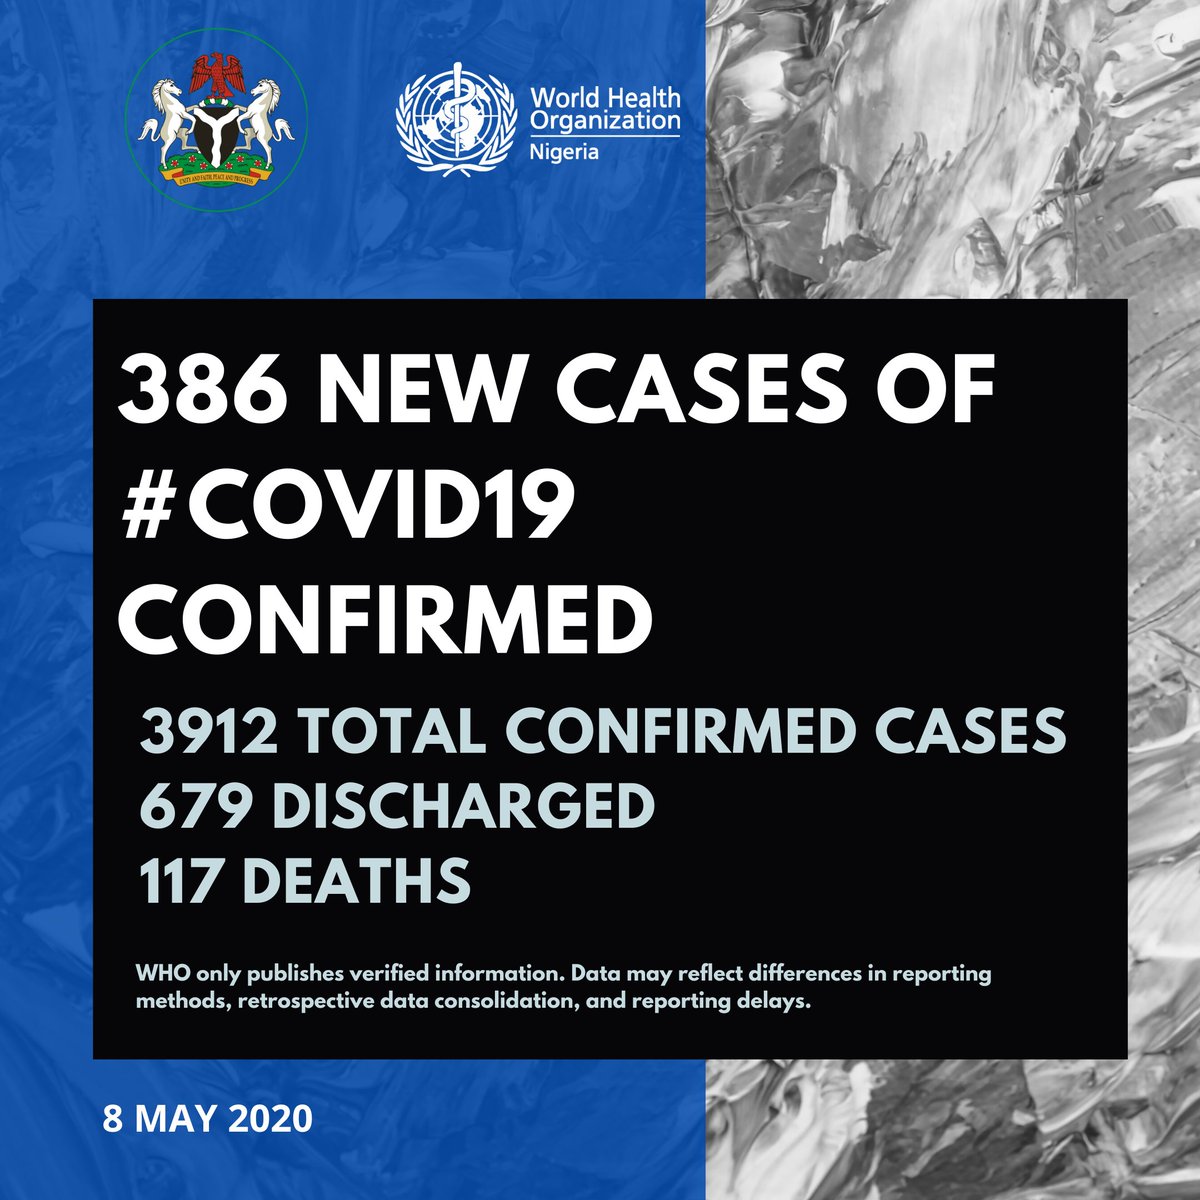 Update as at 8 May, 2020-386 new cases of #COVID19 176-Lagos 65-Kano 31-Katsina 20-FCT 17-Borno 15-Bauchi 14-Nasarawa 13-Ogun 10-Plateau 4-Oyo 4-Sokoto 4-Rivers 3-Kaduna 2-Edo 2-Ebonyi 2-Ondo 1-Enugu 1-Imo 1-Gombe 1-Osun Total confirmed cases: 3912 Discharged: 679 Deaths: 117